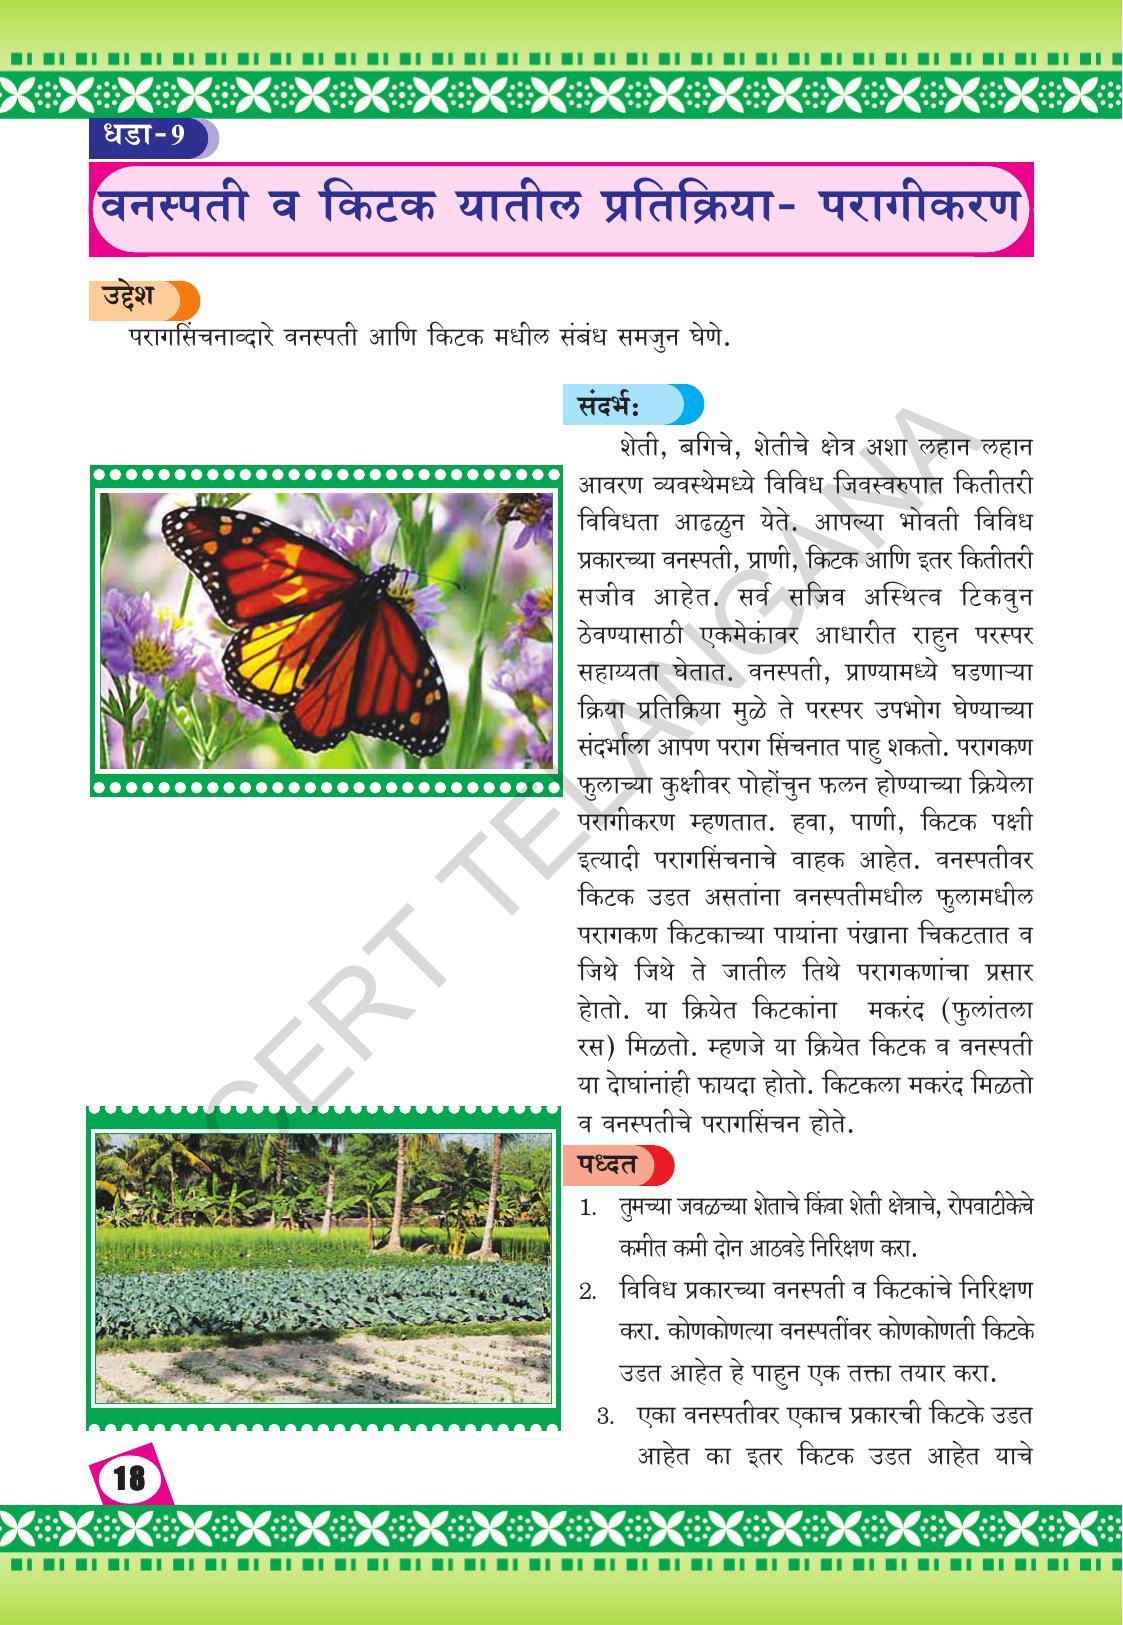 TS SCERT Class 10 Social Environmental Education (Marathi Medium) Text Book - Page 26